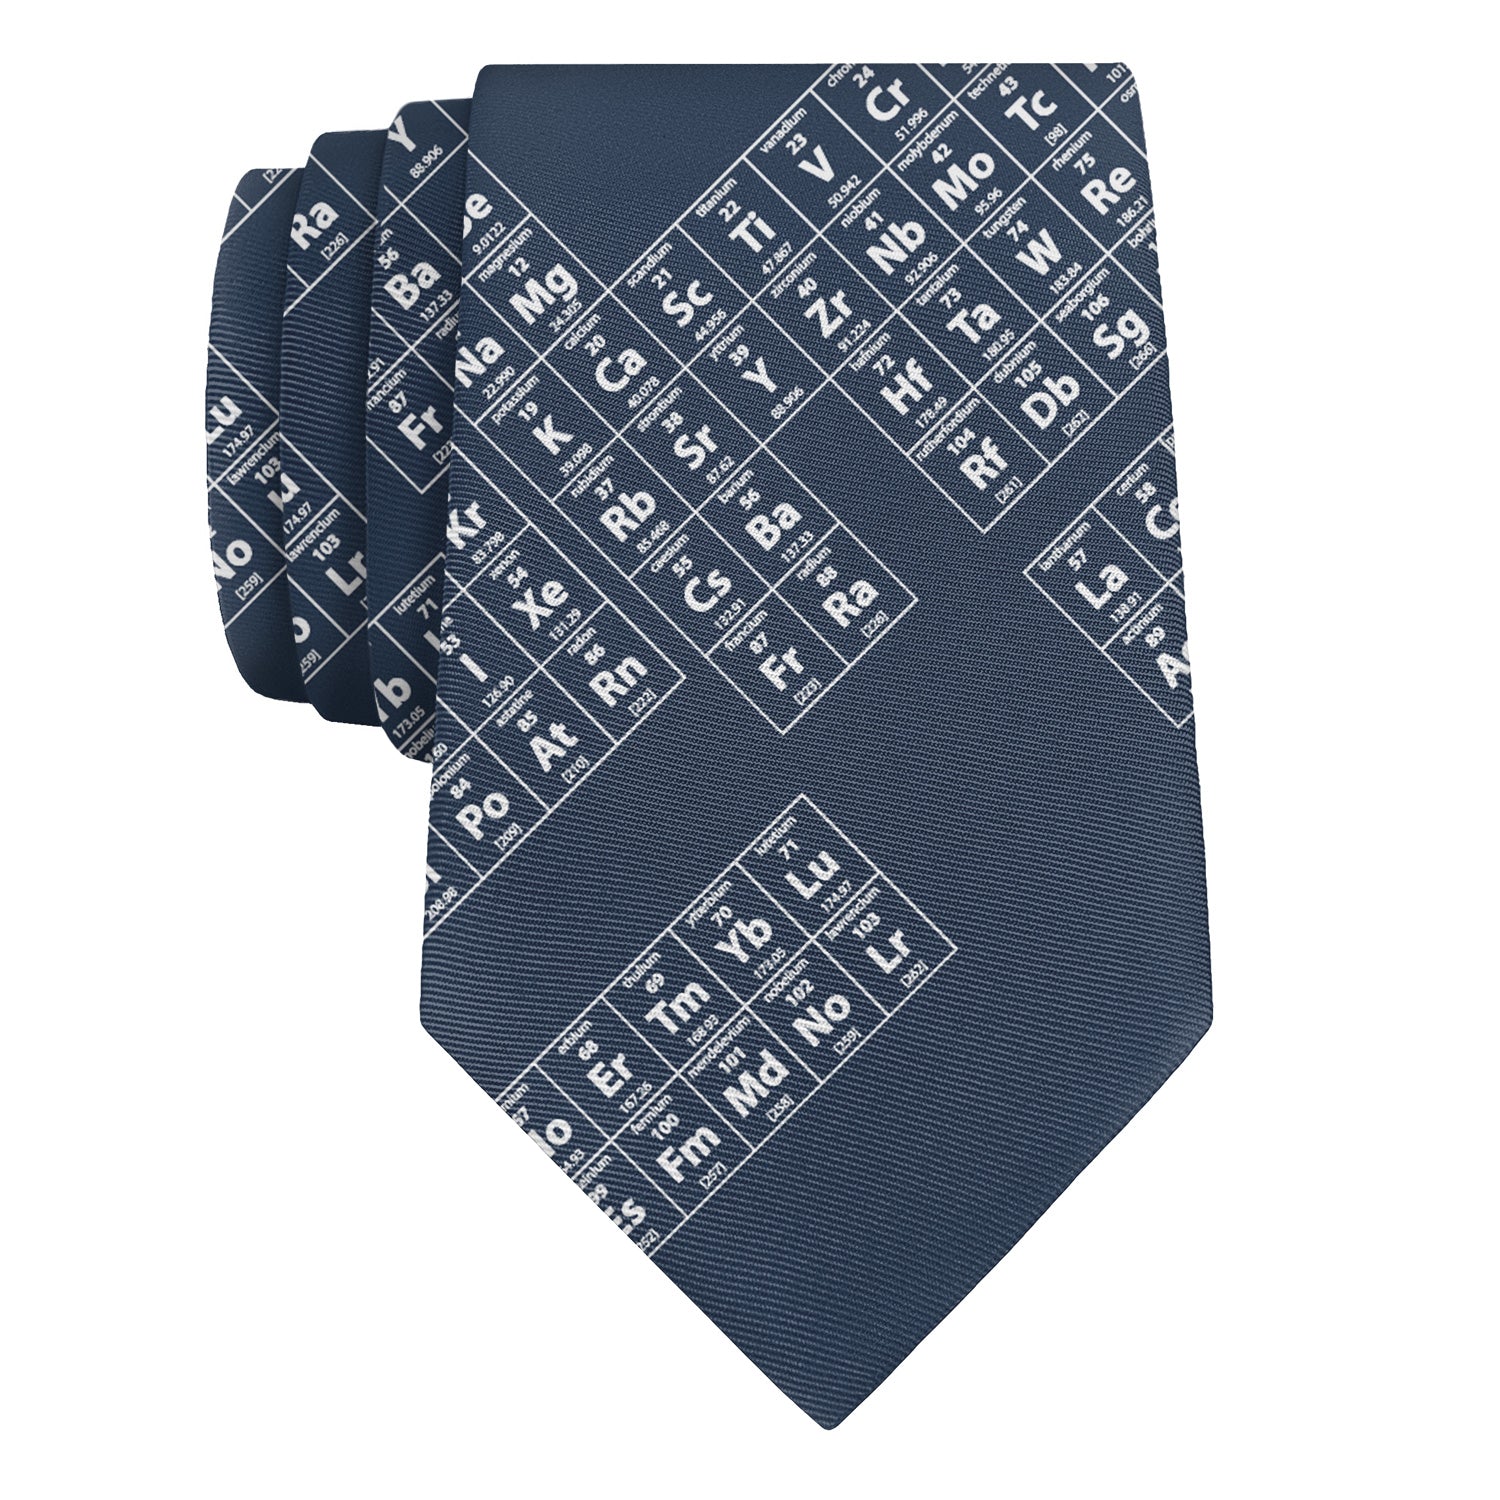 Periodic Table Necktie - Knotty 2.75" -  - Knotty Tie Co.